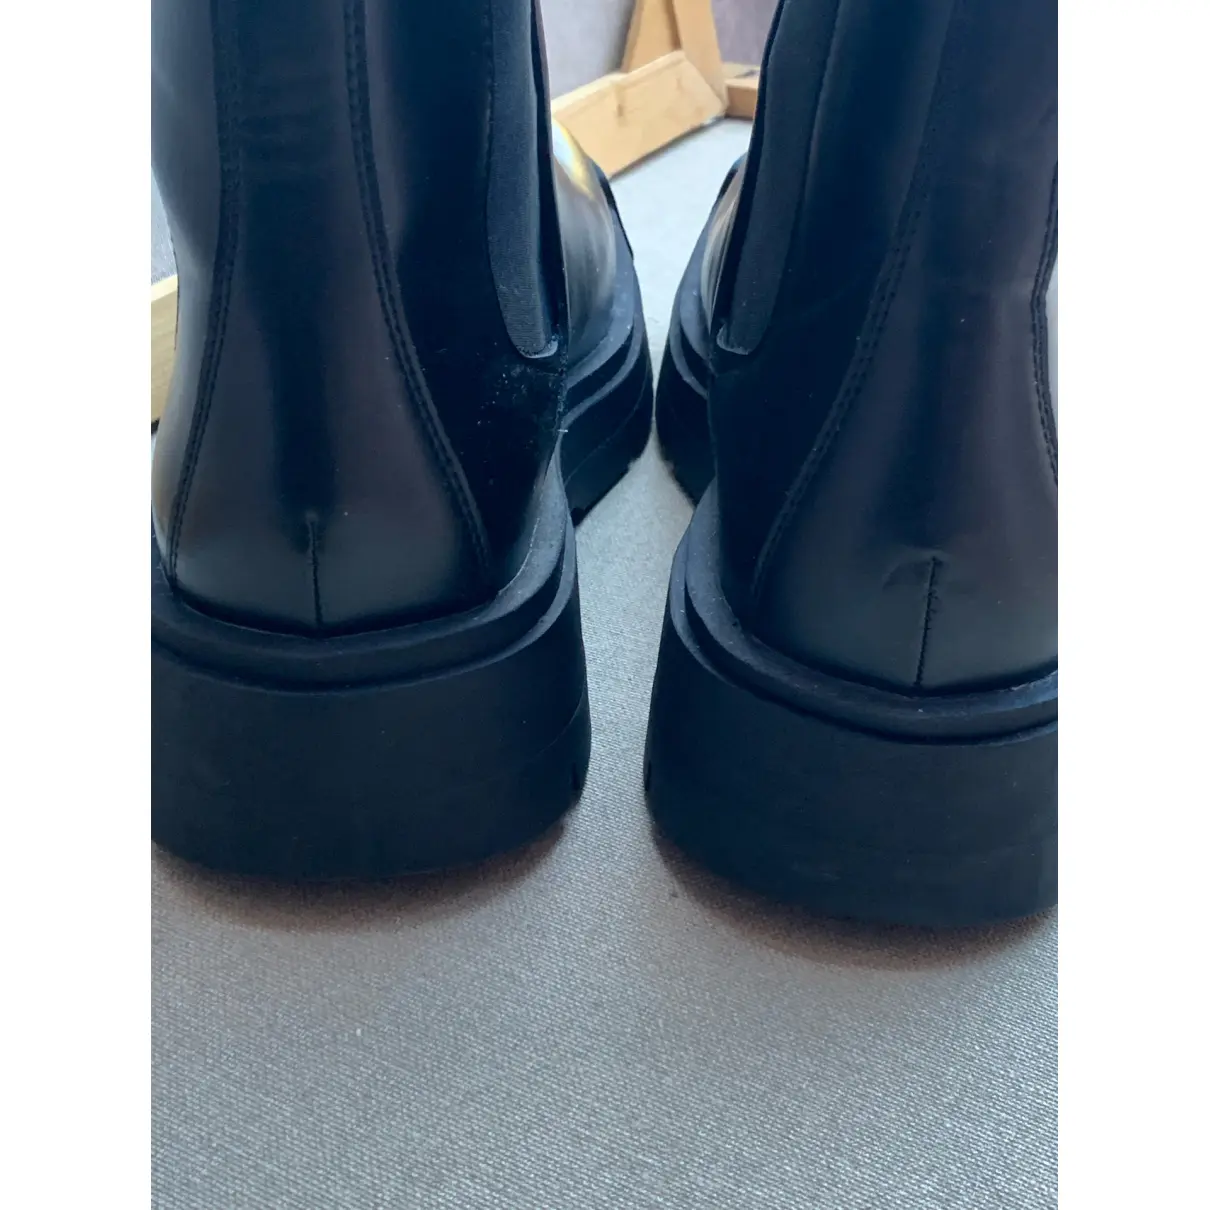 Buy Zara Leather boots online